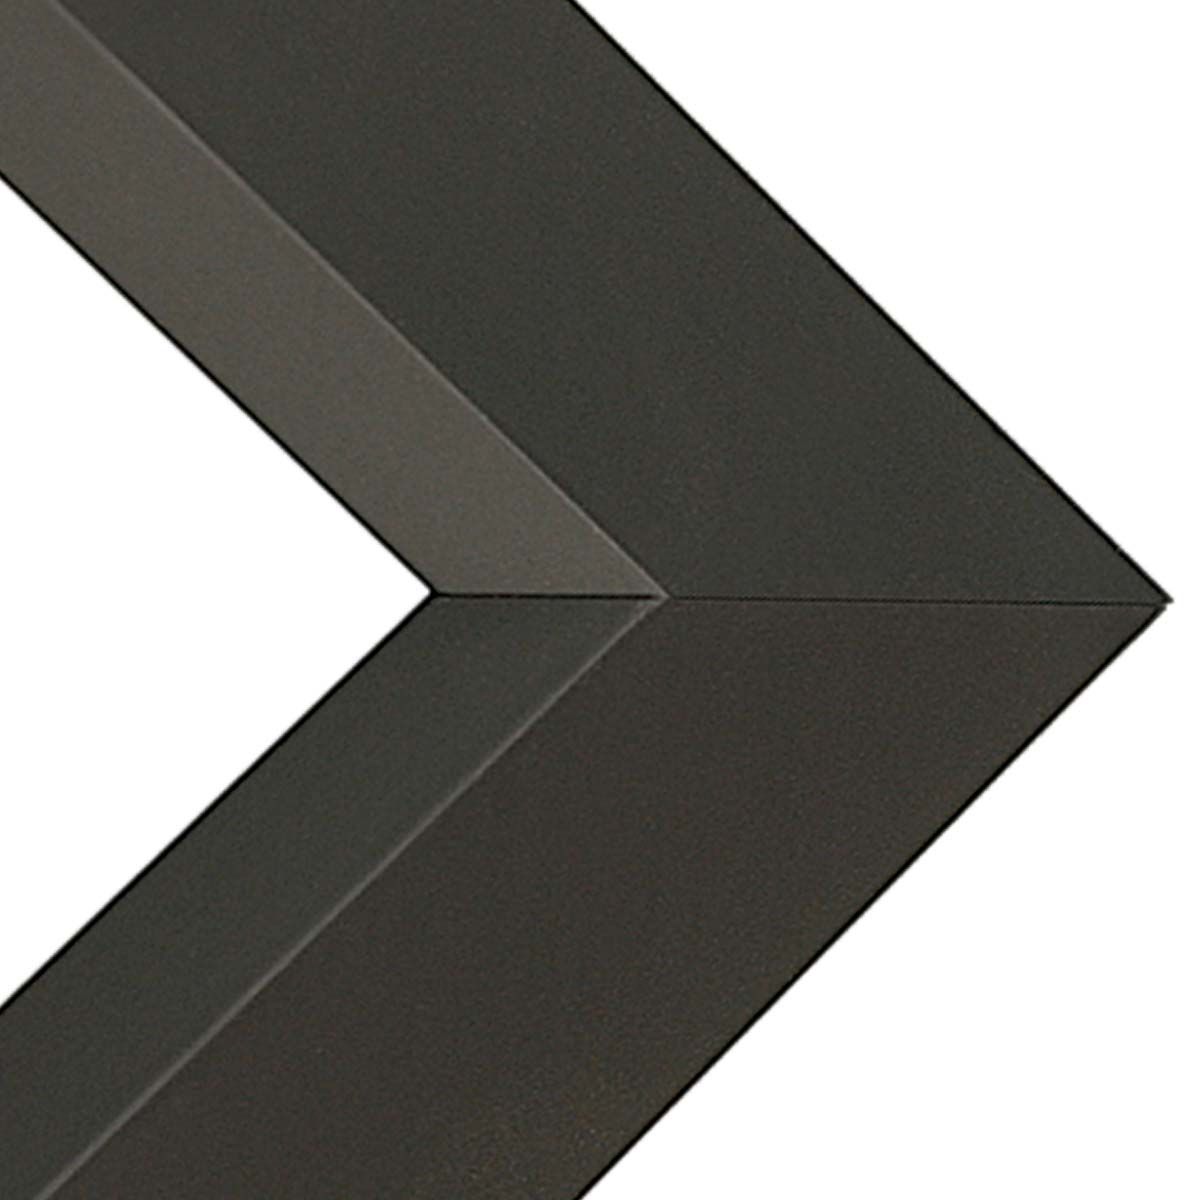 Columbia 1.75"Wood Frame with acrylic glazing and cardboard backing 24x30" - Black